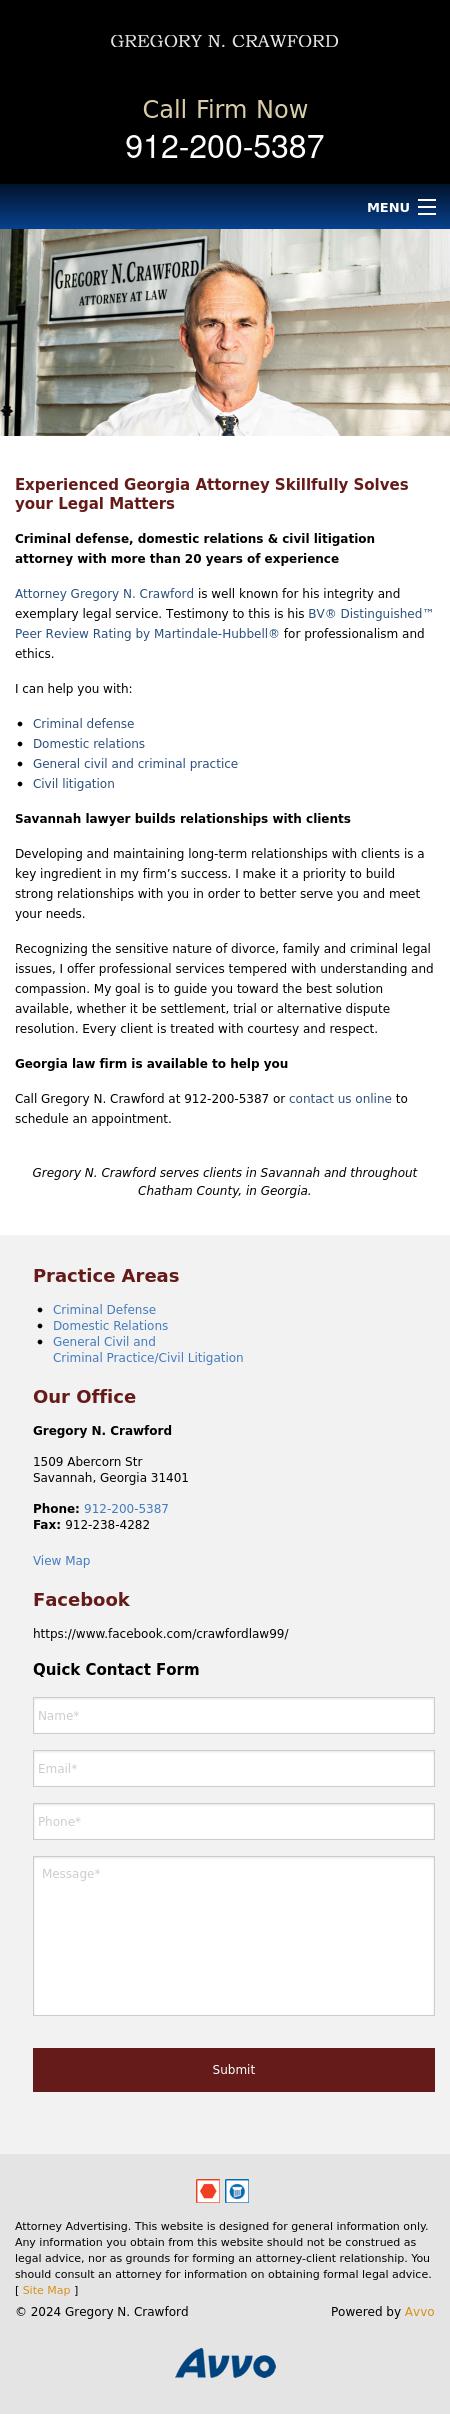 Crawford, Gregory N - Savannah GA Lawyers